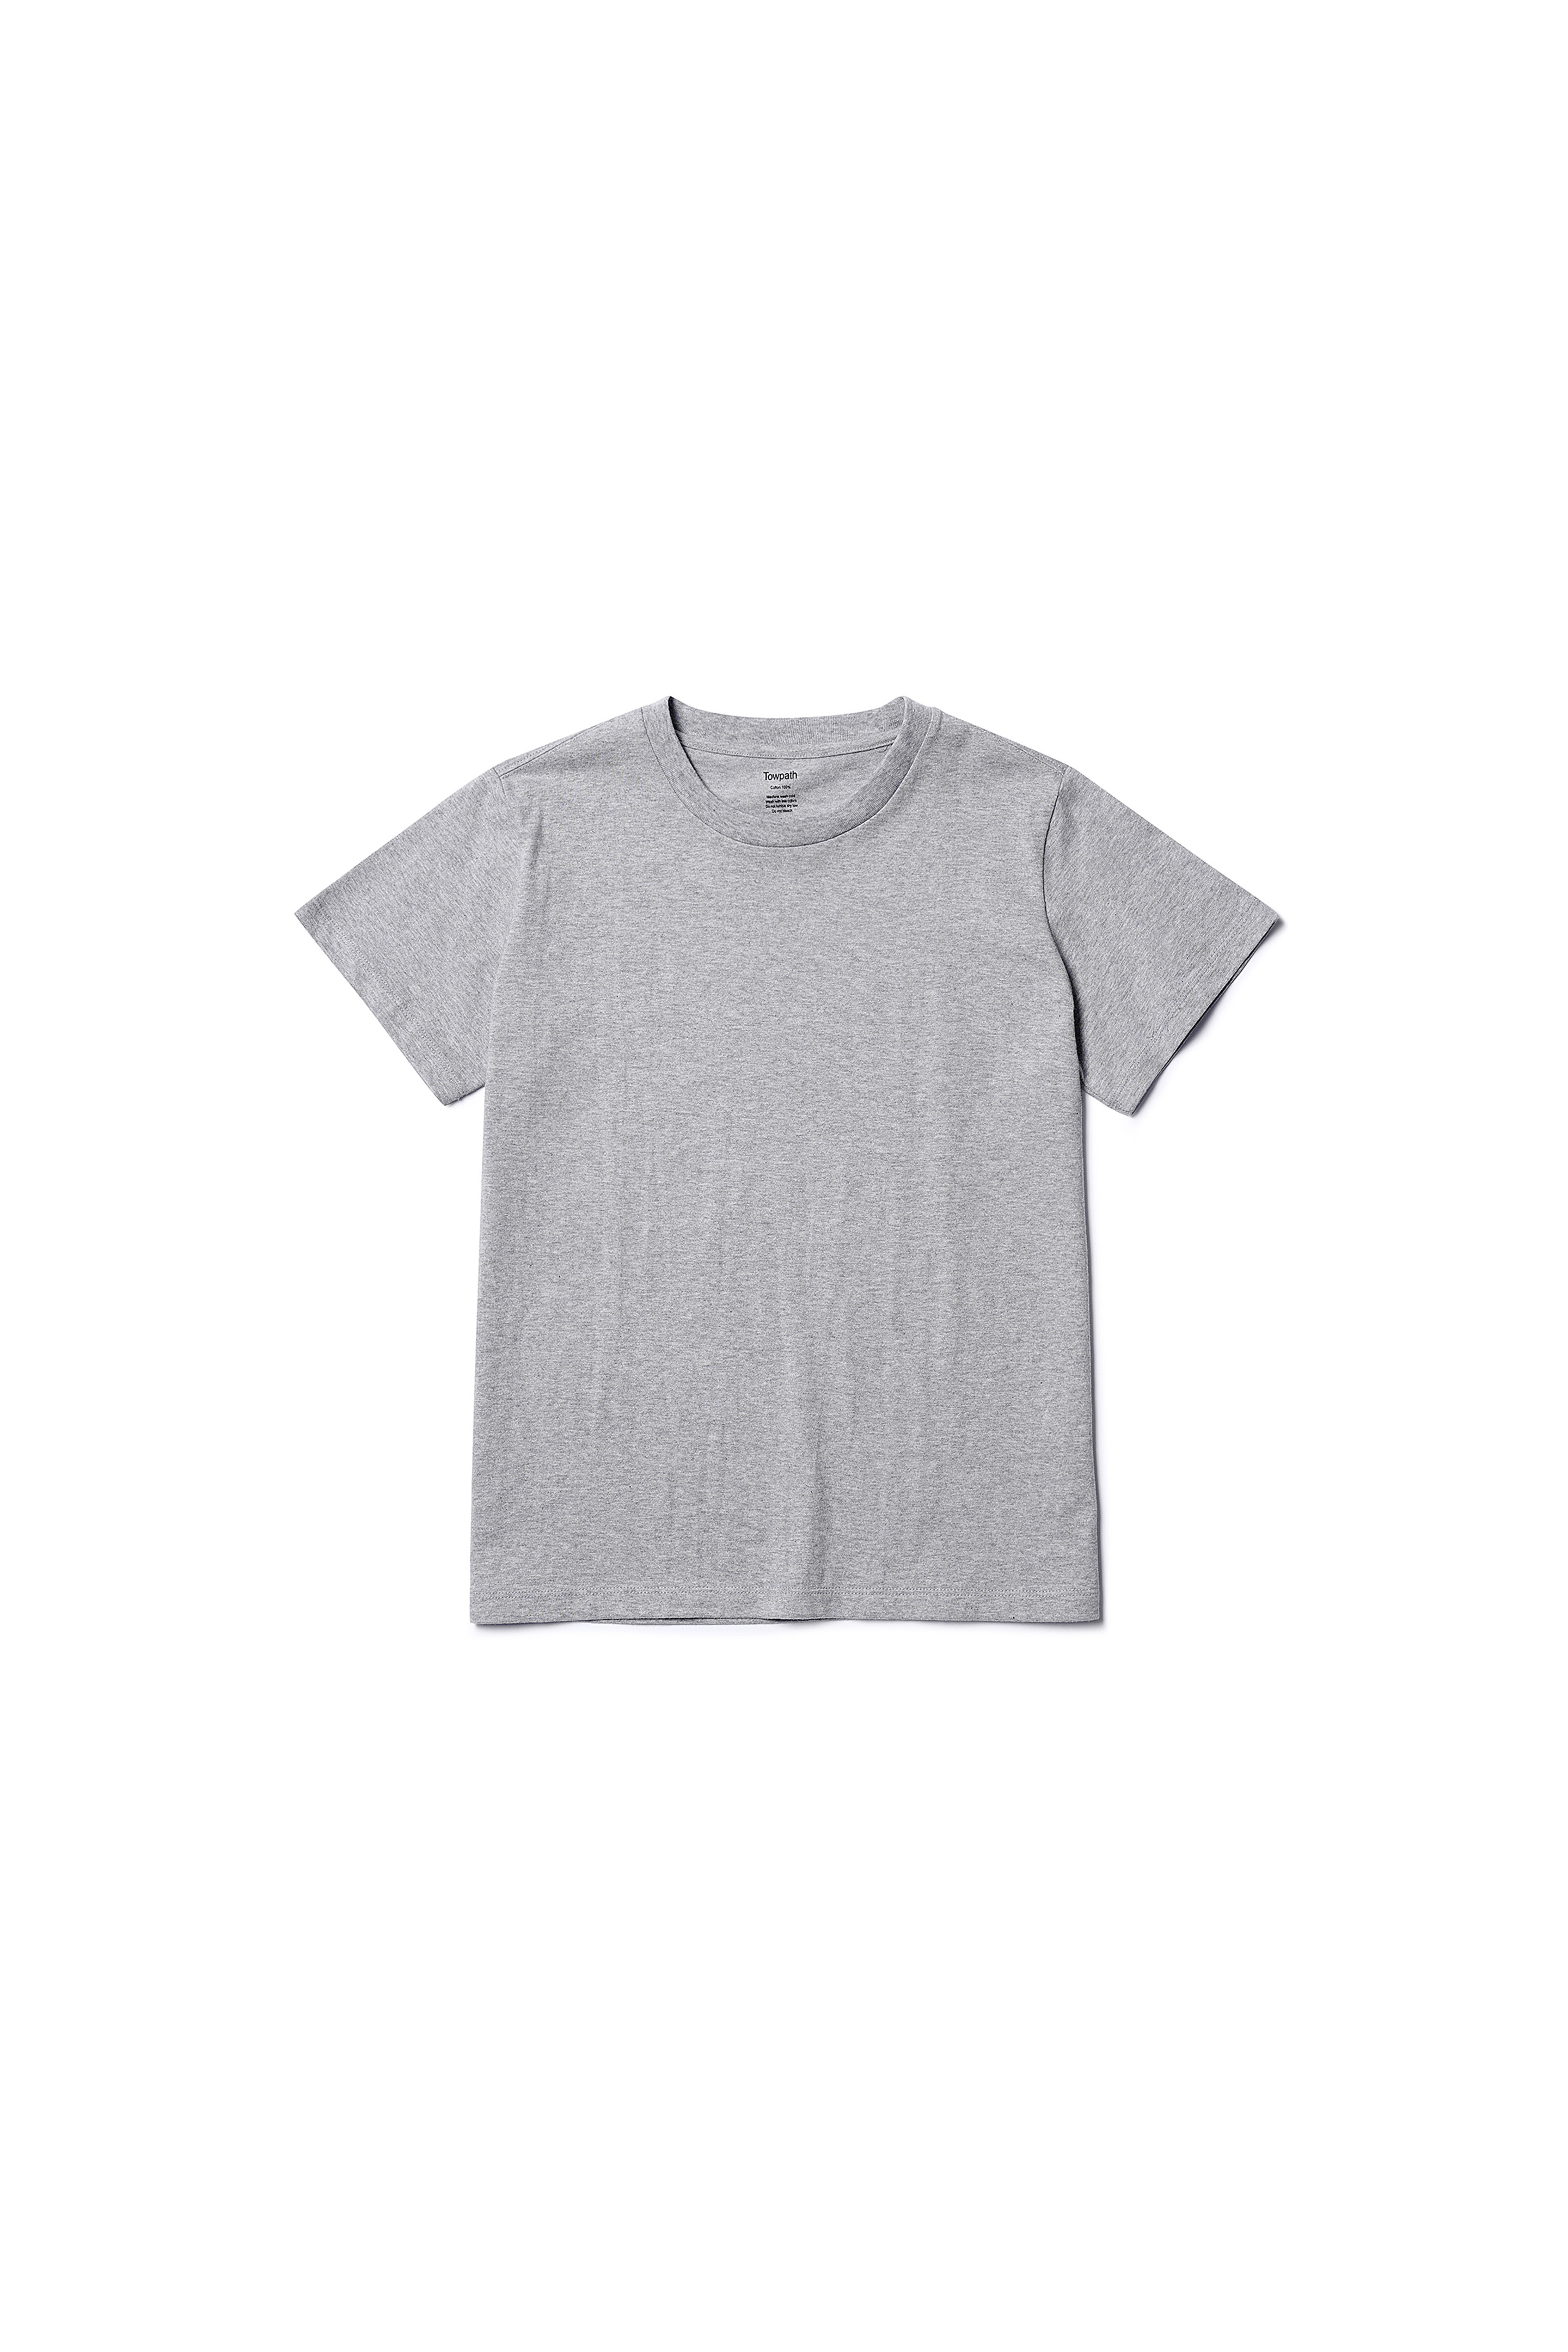 Towpath 002 Crew-neck T-shirt (Grey)